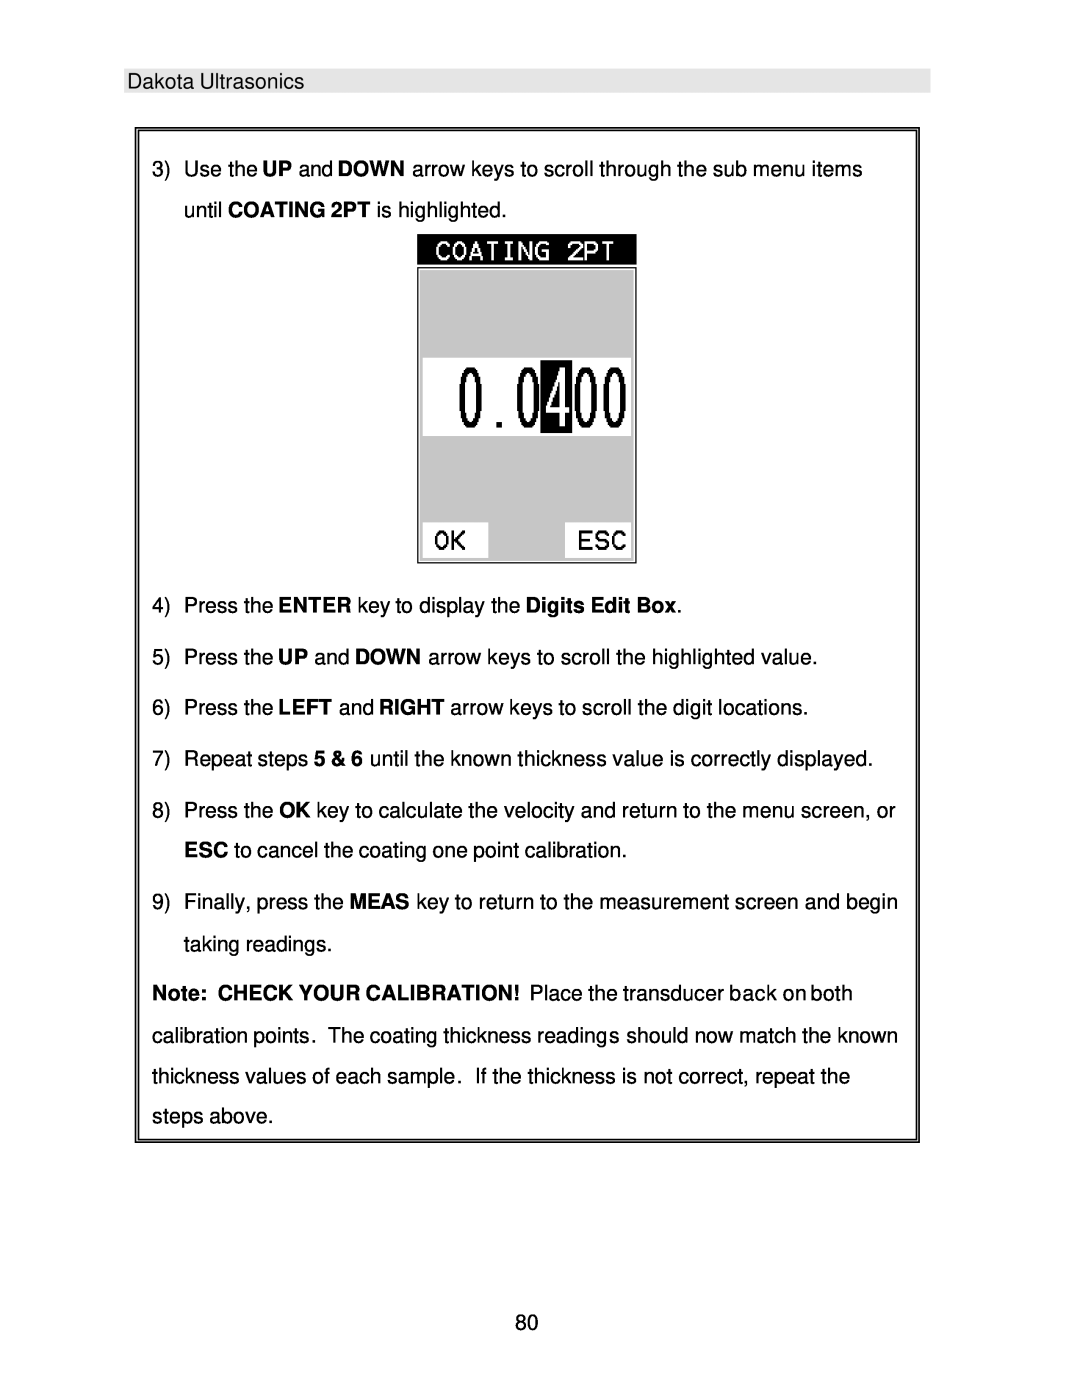 Dakota Digital CMX operation manual Dakota Ultrasonics, Press the ENTER key to display the Digits Edit Box 